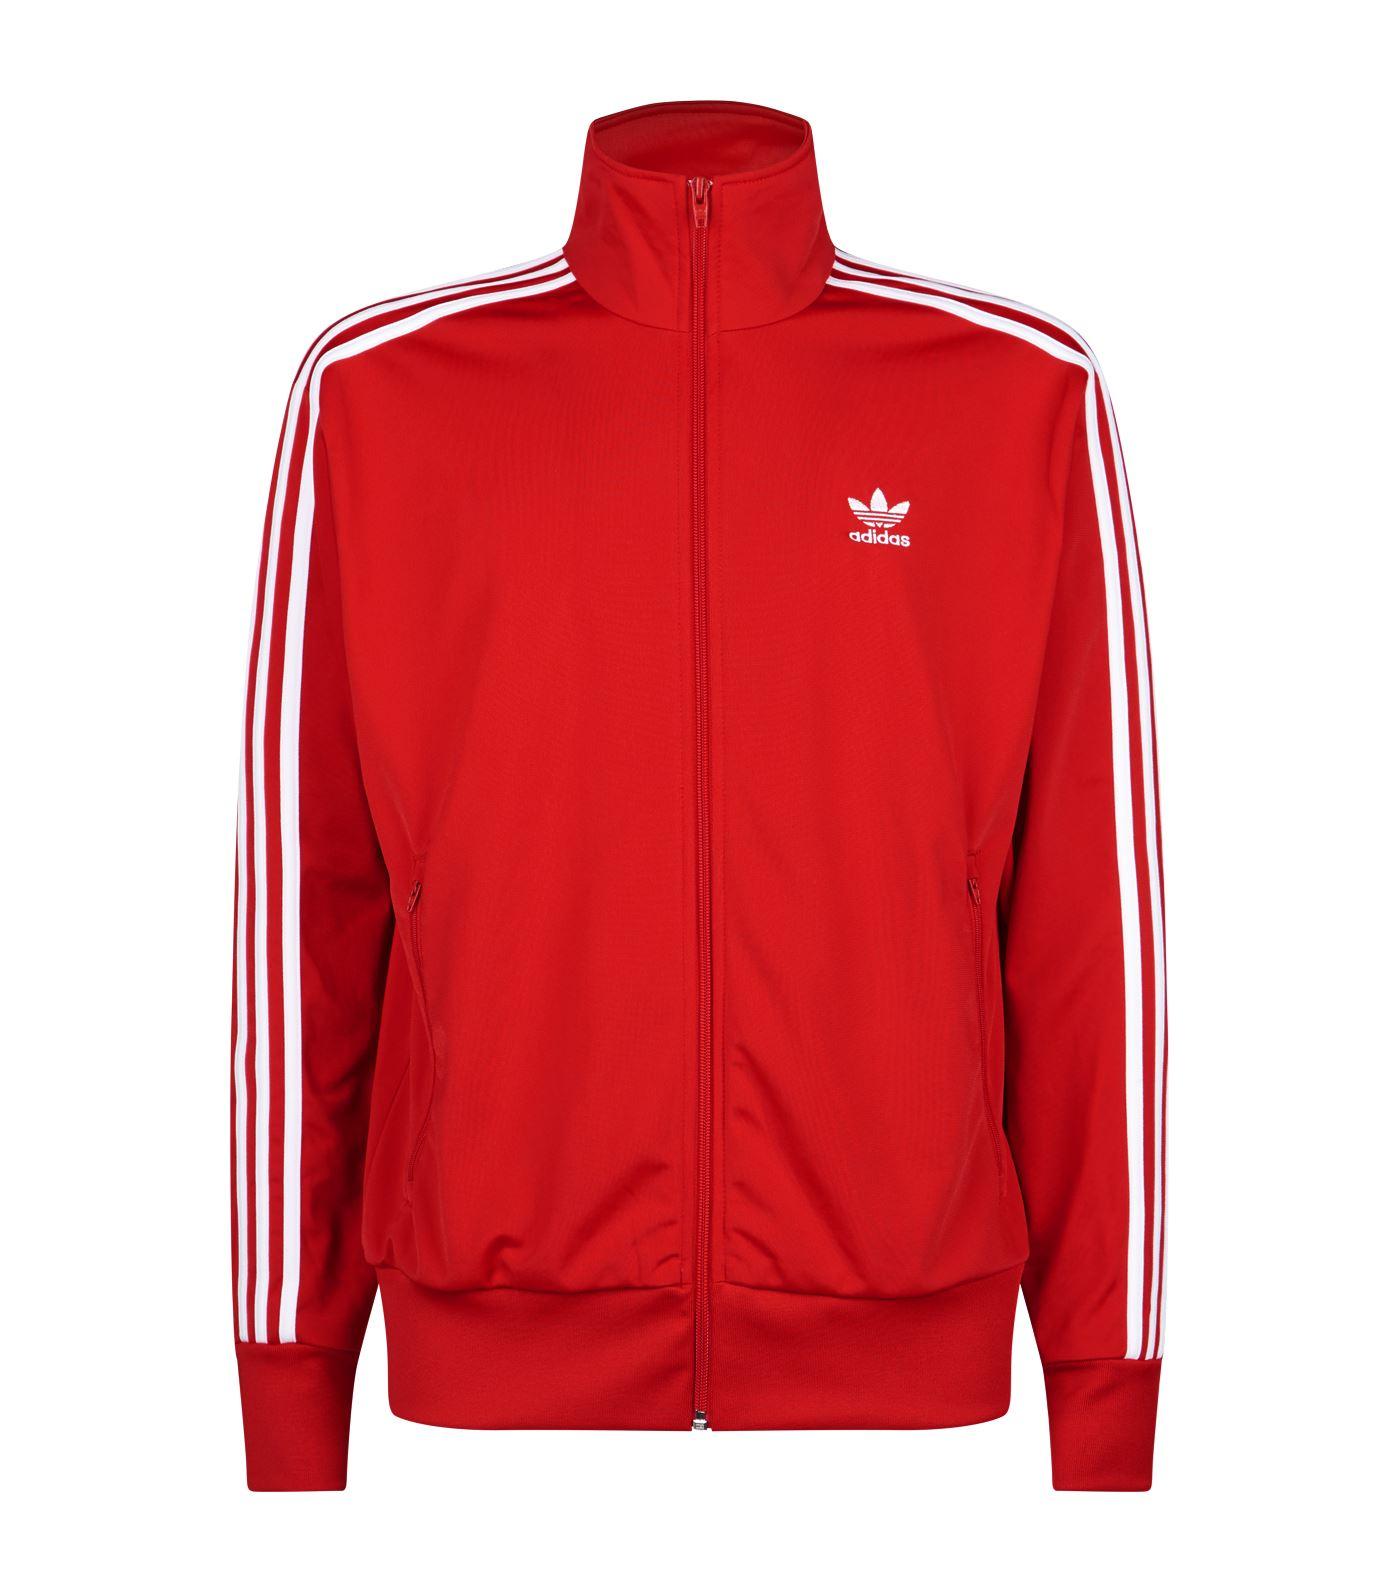 adidas Originals Firebird Track Jacket in Red for Men - Lyst